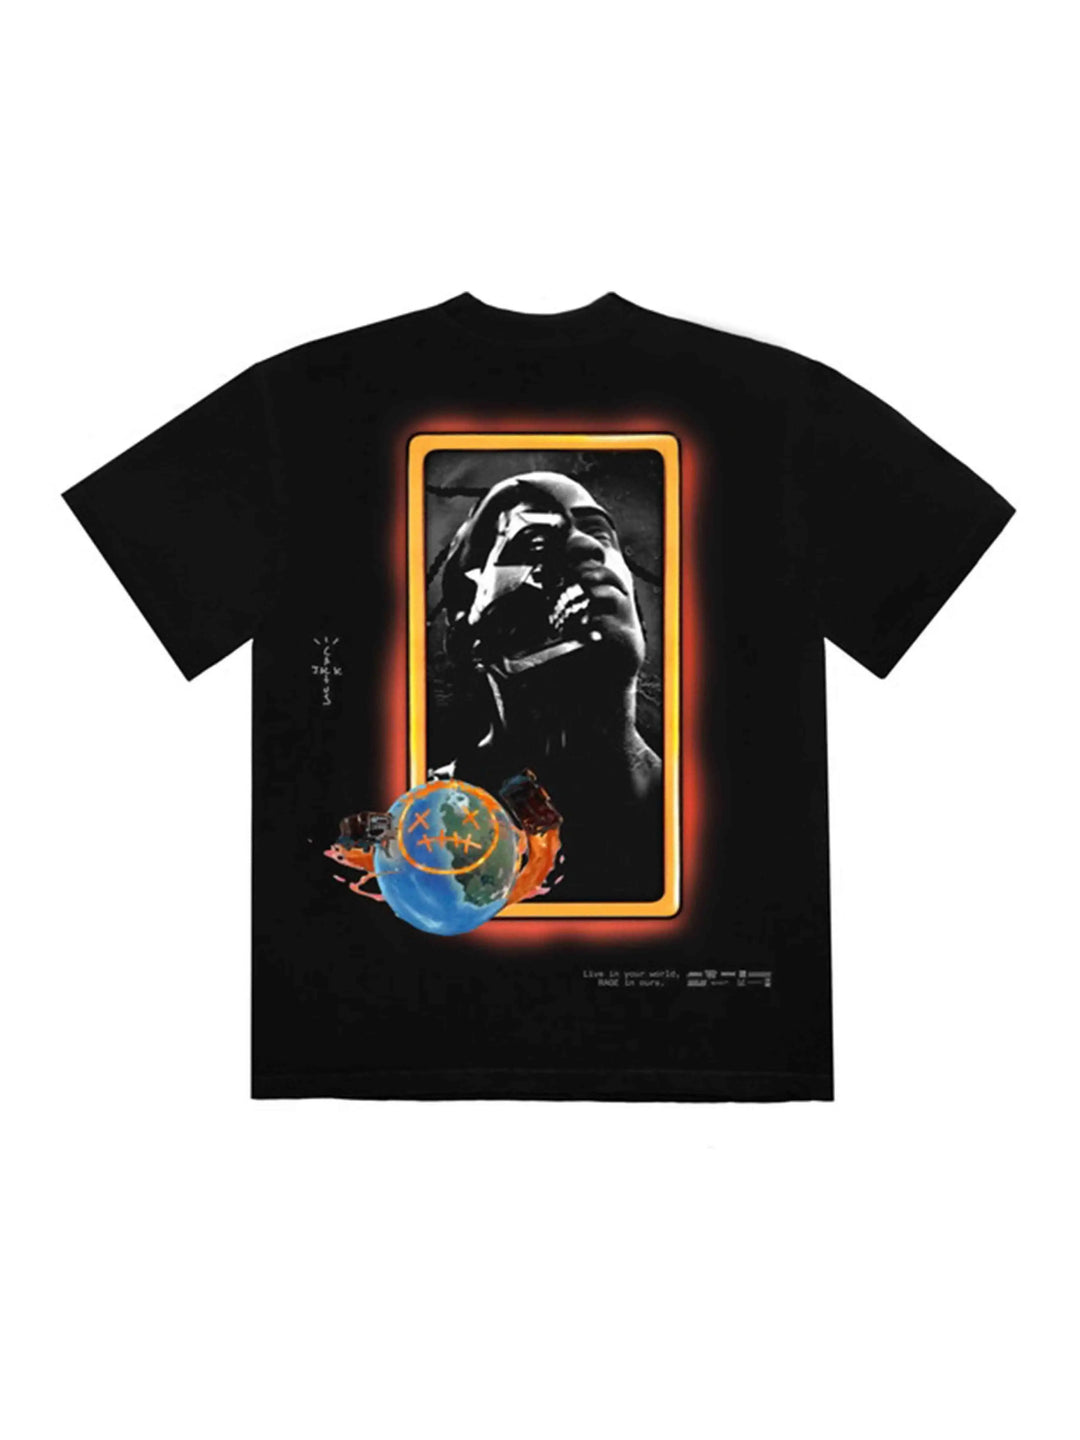 Travis Scott Astro Portrait T-Shirt Black [FACTORY FLAW] Prior